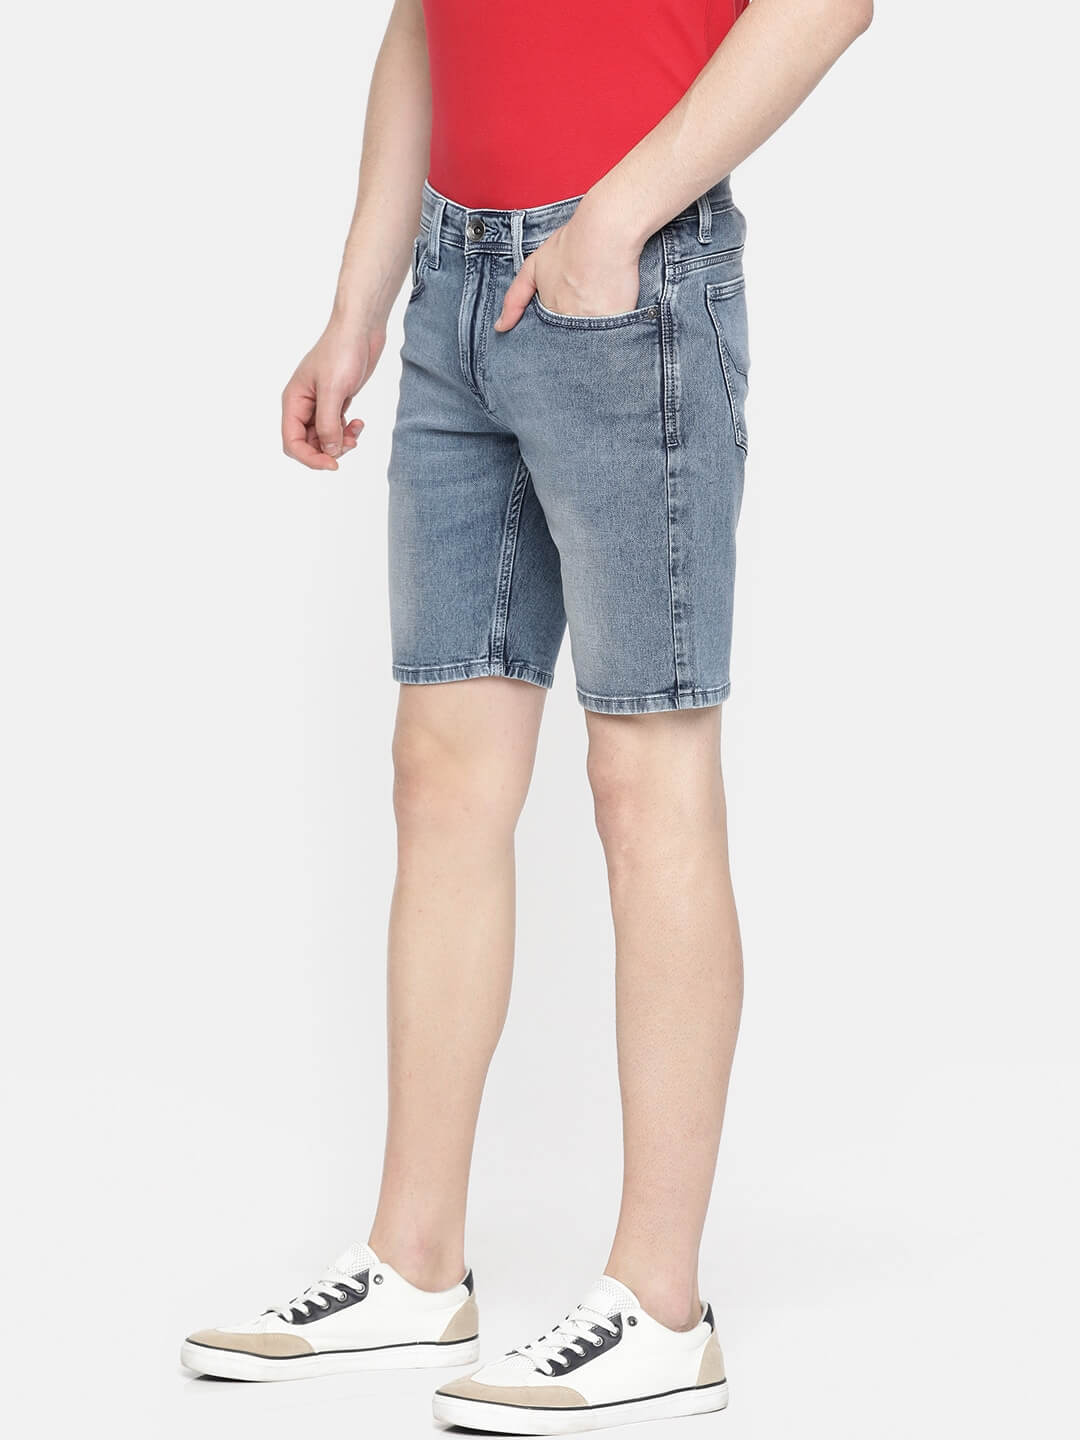 Men Blue Solid Kenzy Chinox Slim Fit Denim Shorts - Back View - AceCart